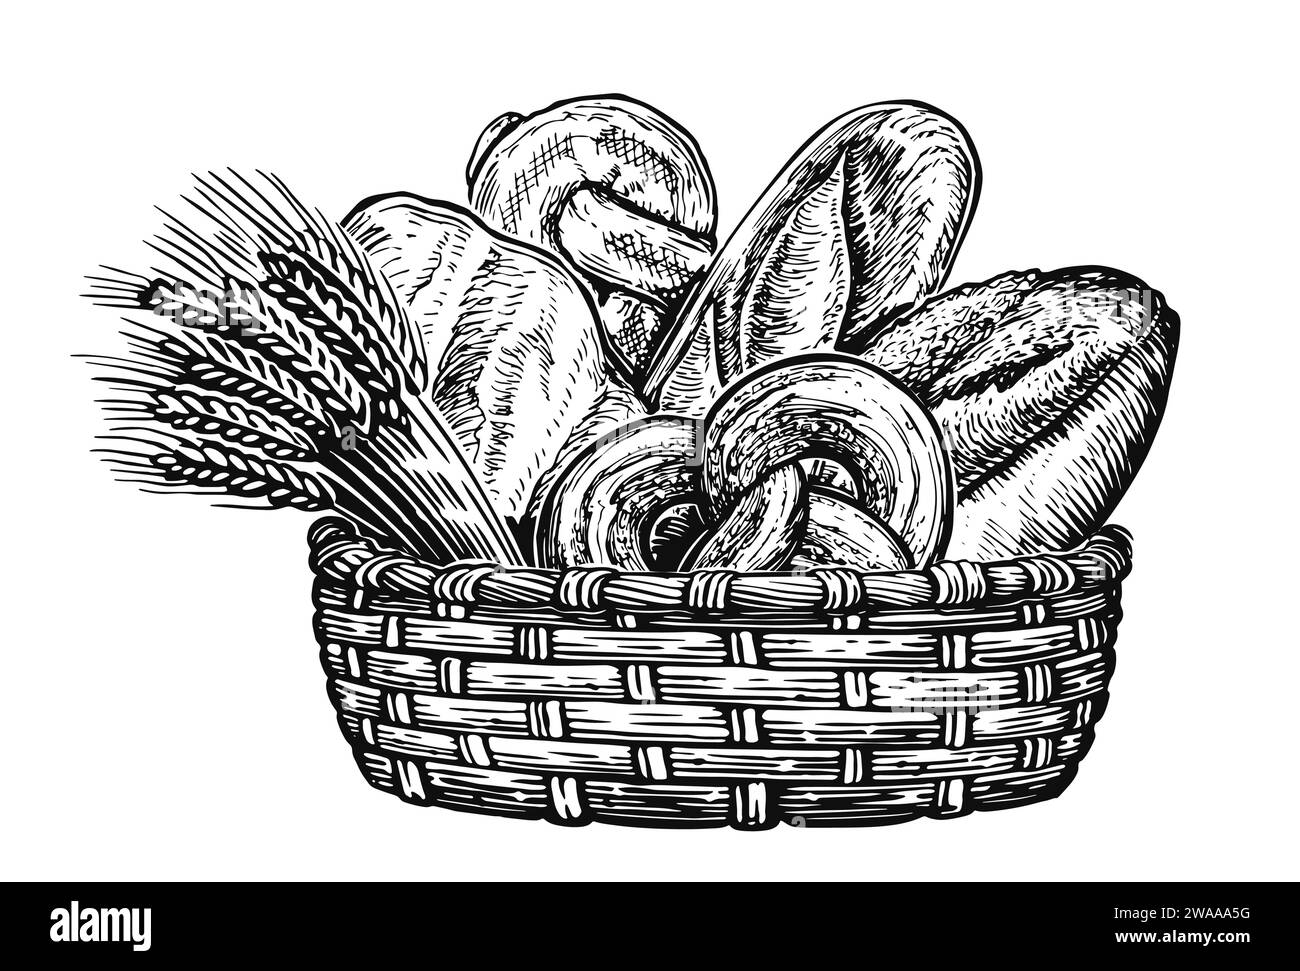 Korb voller Backwaren, Vintage-Stilgravierung. Brot und Gebäck, Skizze Illustration Stock Vektor